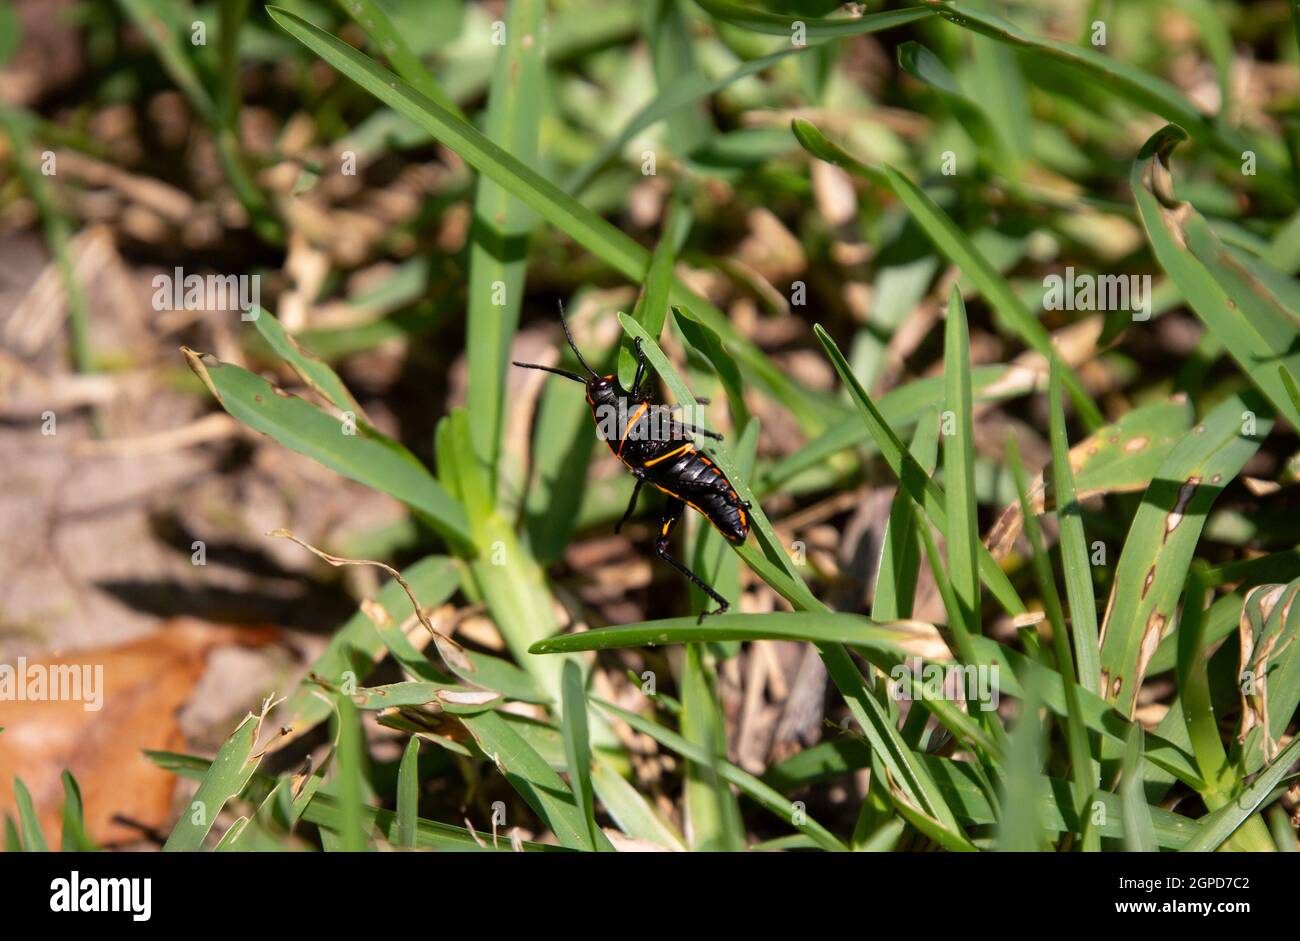 Southeastern lubber grasshopper (Romalea microptera) climbing a blade of grass Stock Photo